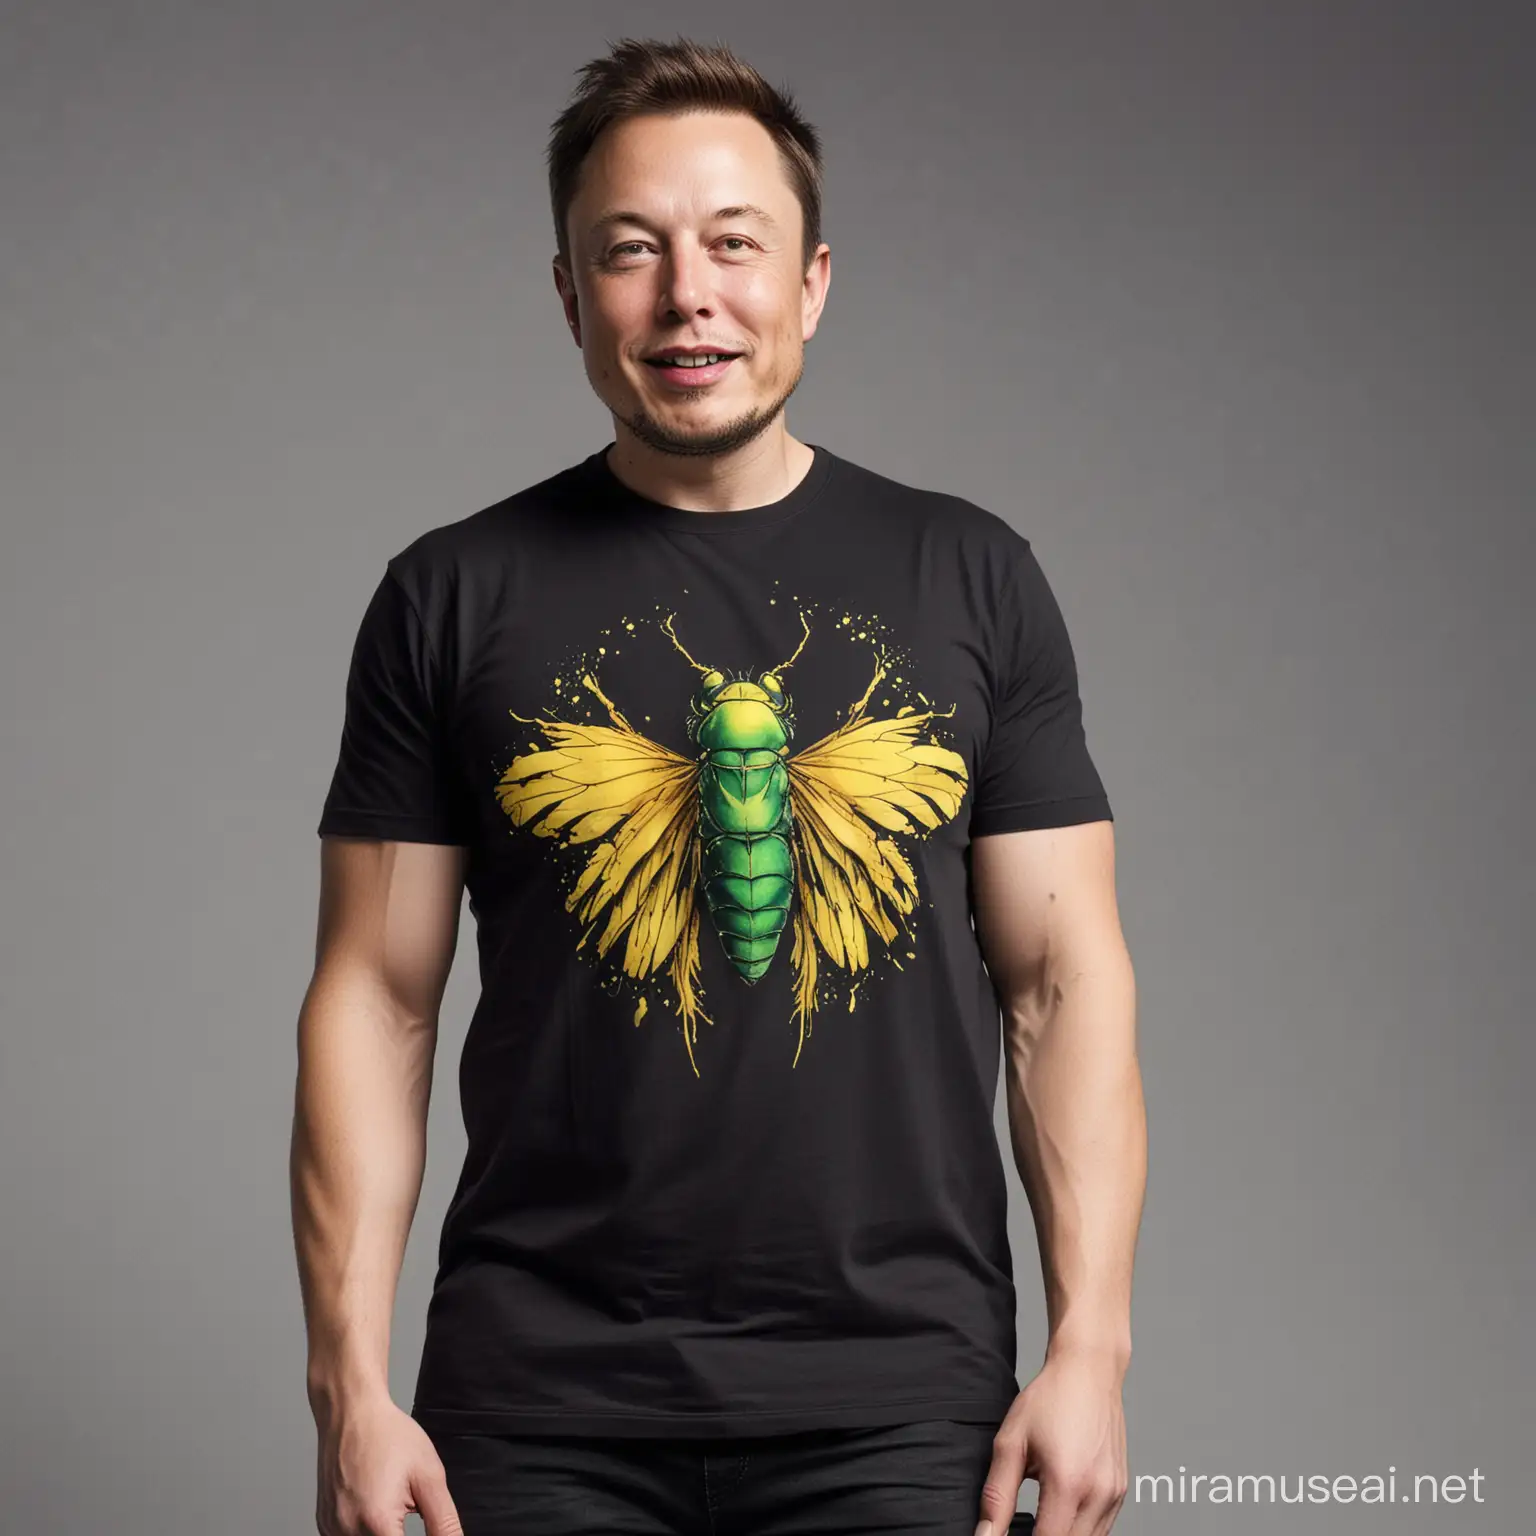 Elon Musk Wearing Green and Yellow Fly Print TShirt